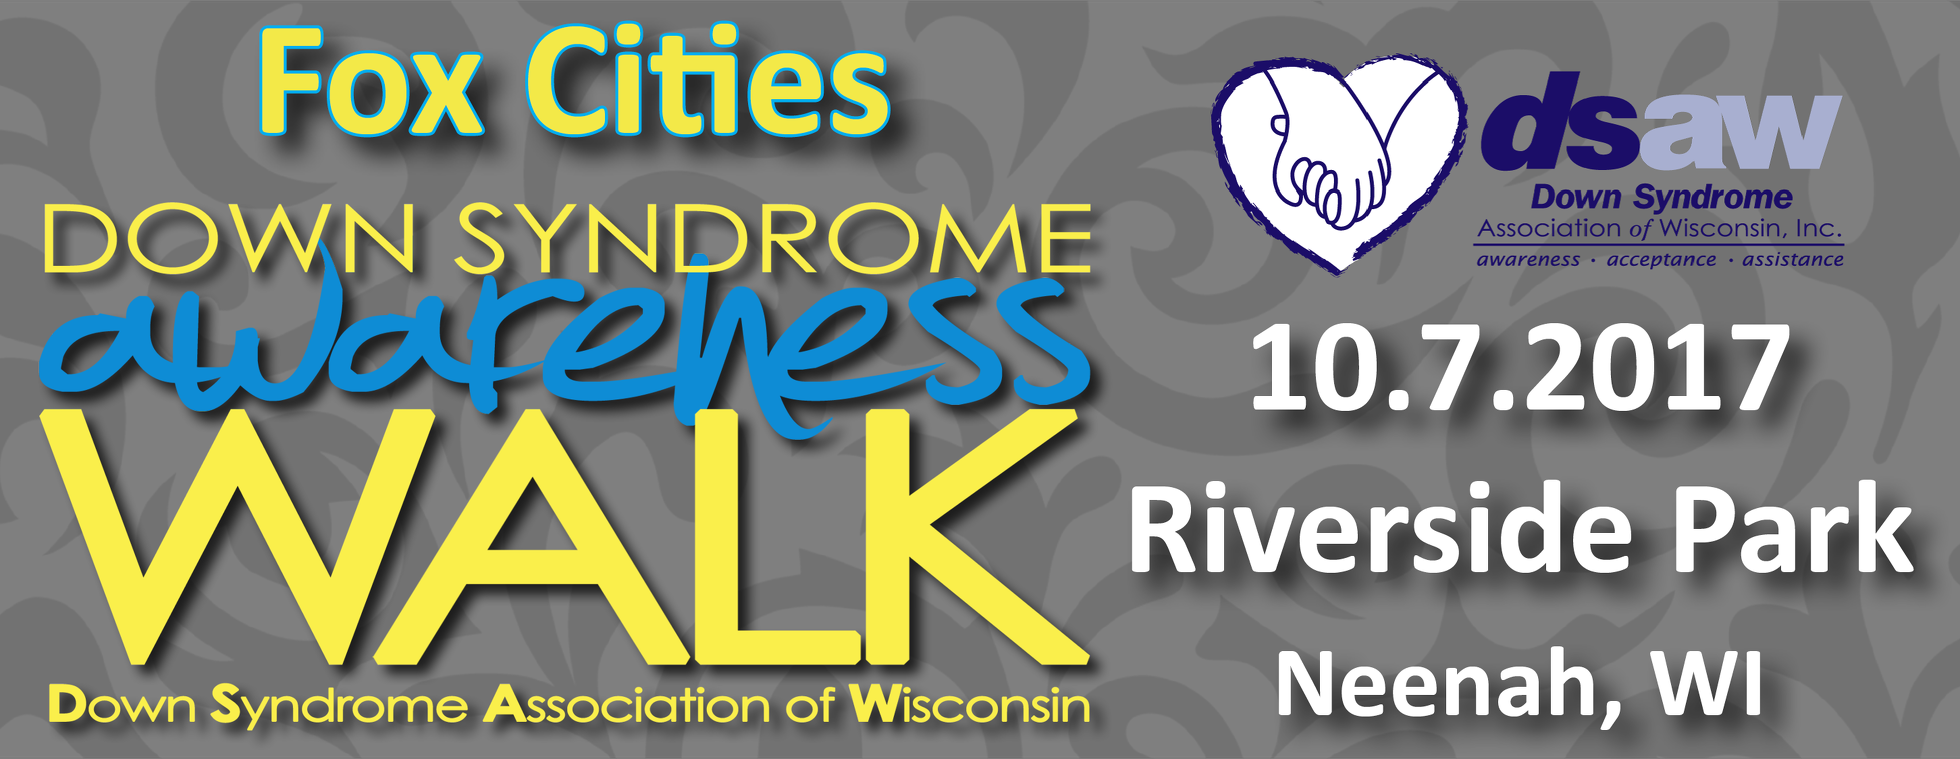 Fox Cities Down Syndrome Awareness Walk 2017